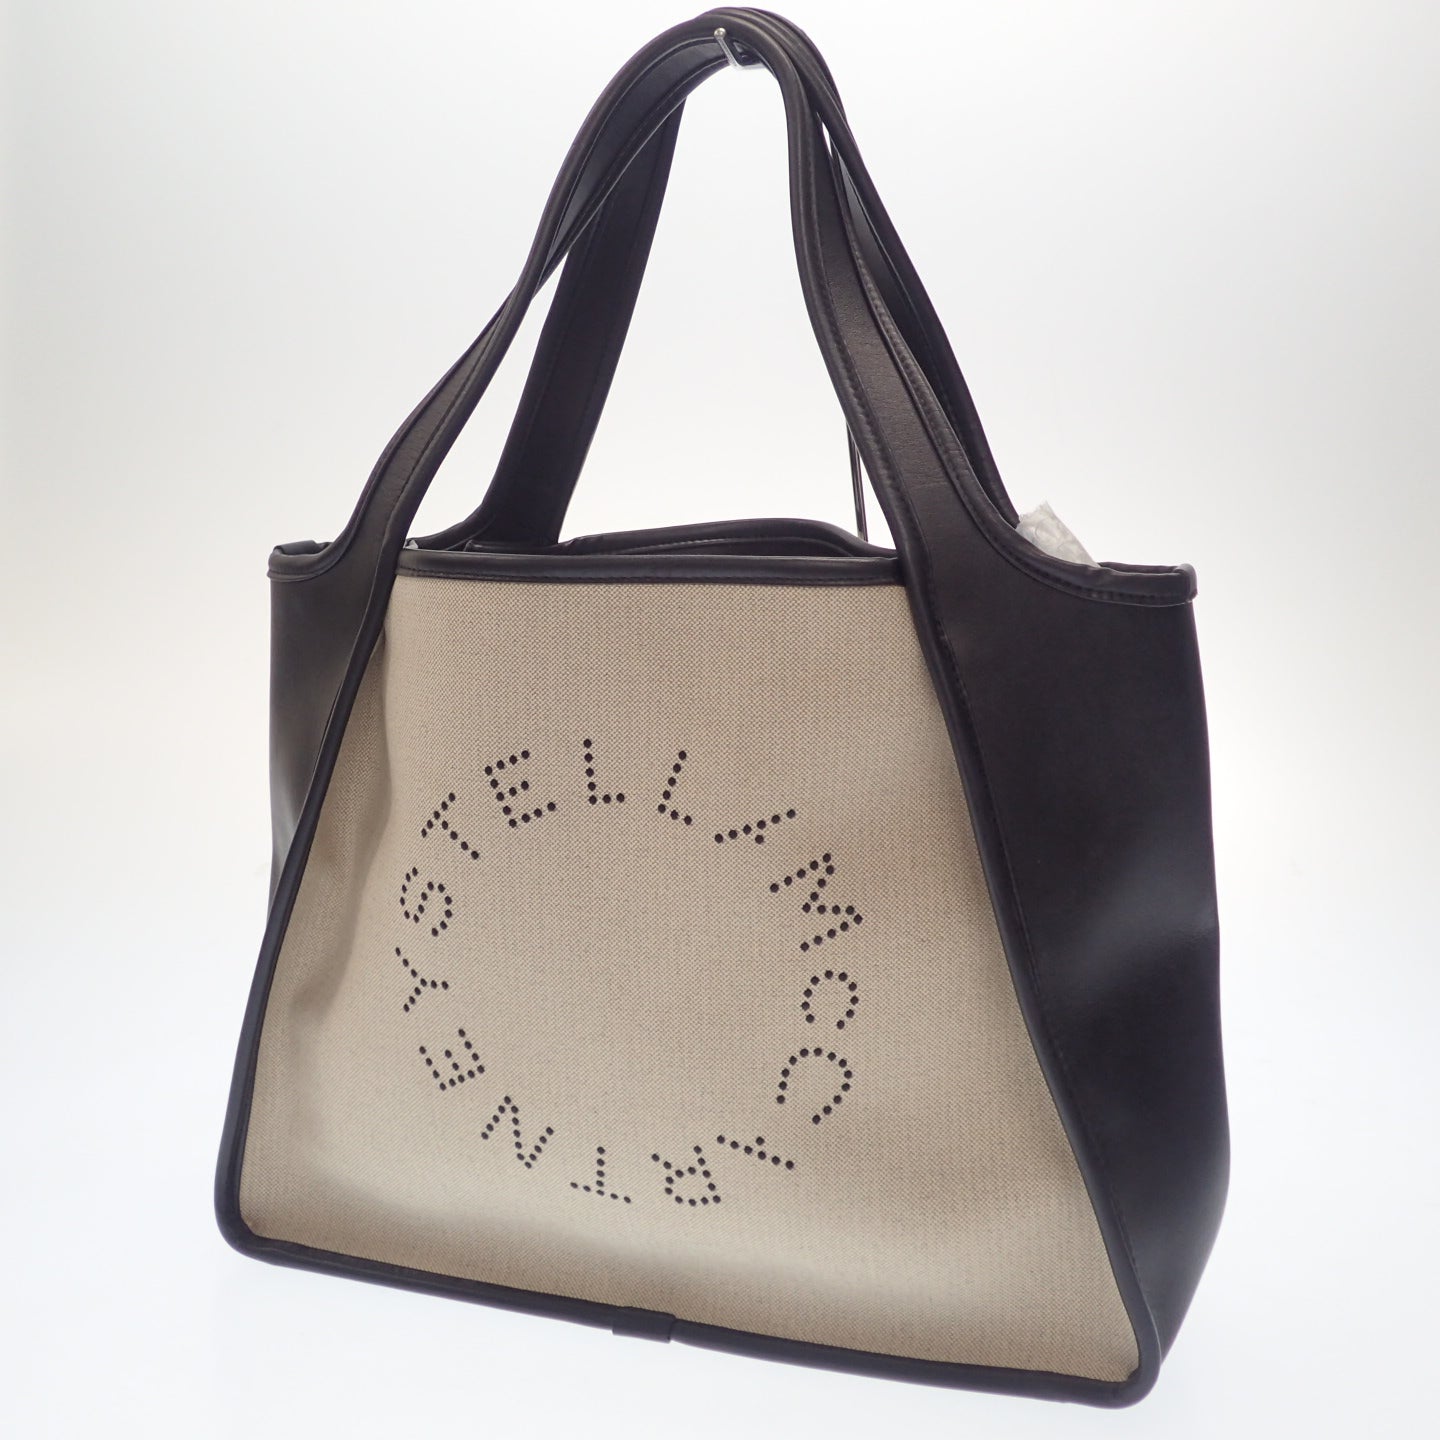 Stella McCartney canvas logo tote bag 502793 STELLA McCARTNEY [AFE6] [Used] 